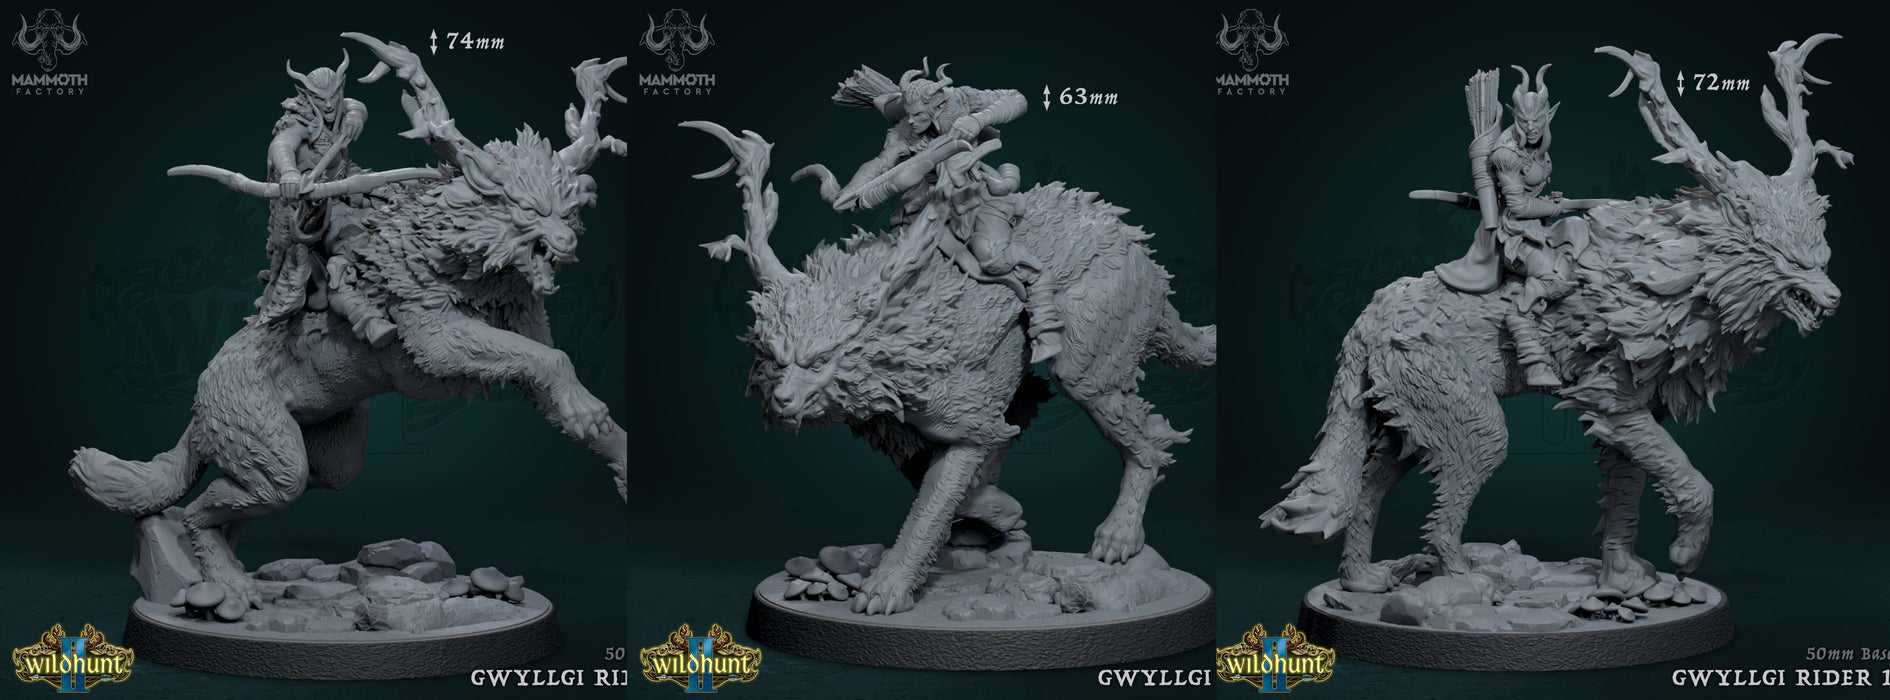 Gwyllgi Wolf Rider Miniatures | Wild Hunt II | Fantasy Tabletop Miniature | Mammoth Factory